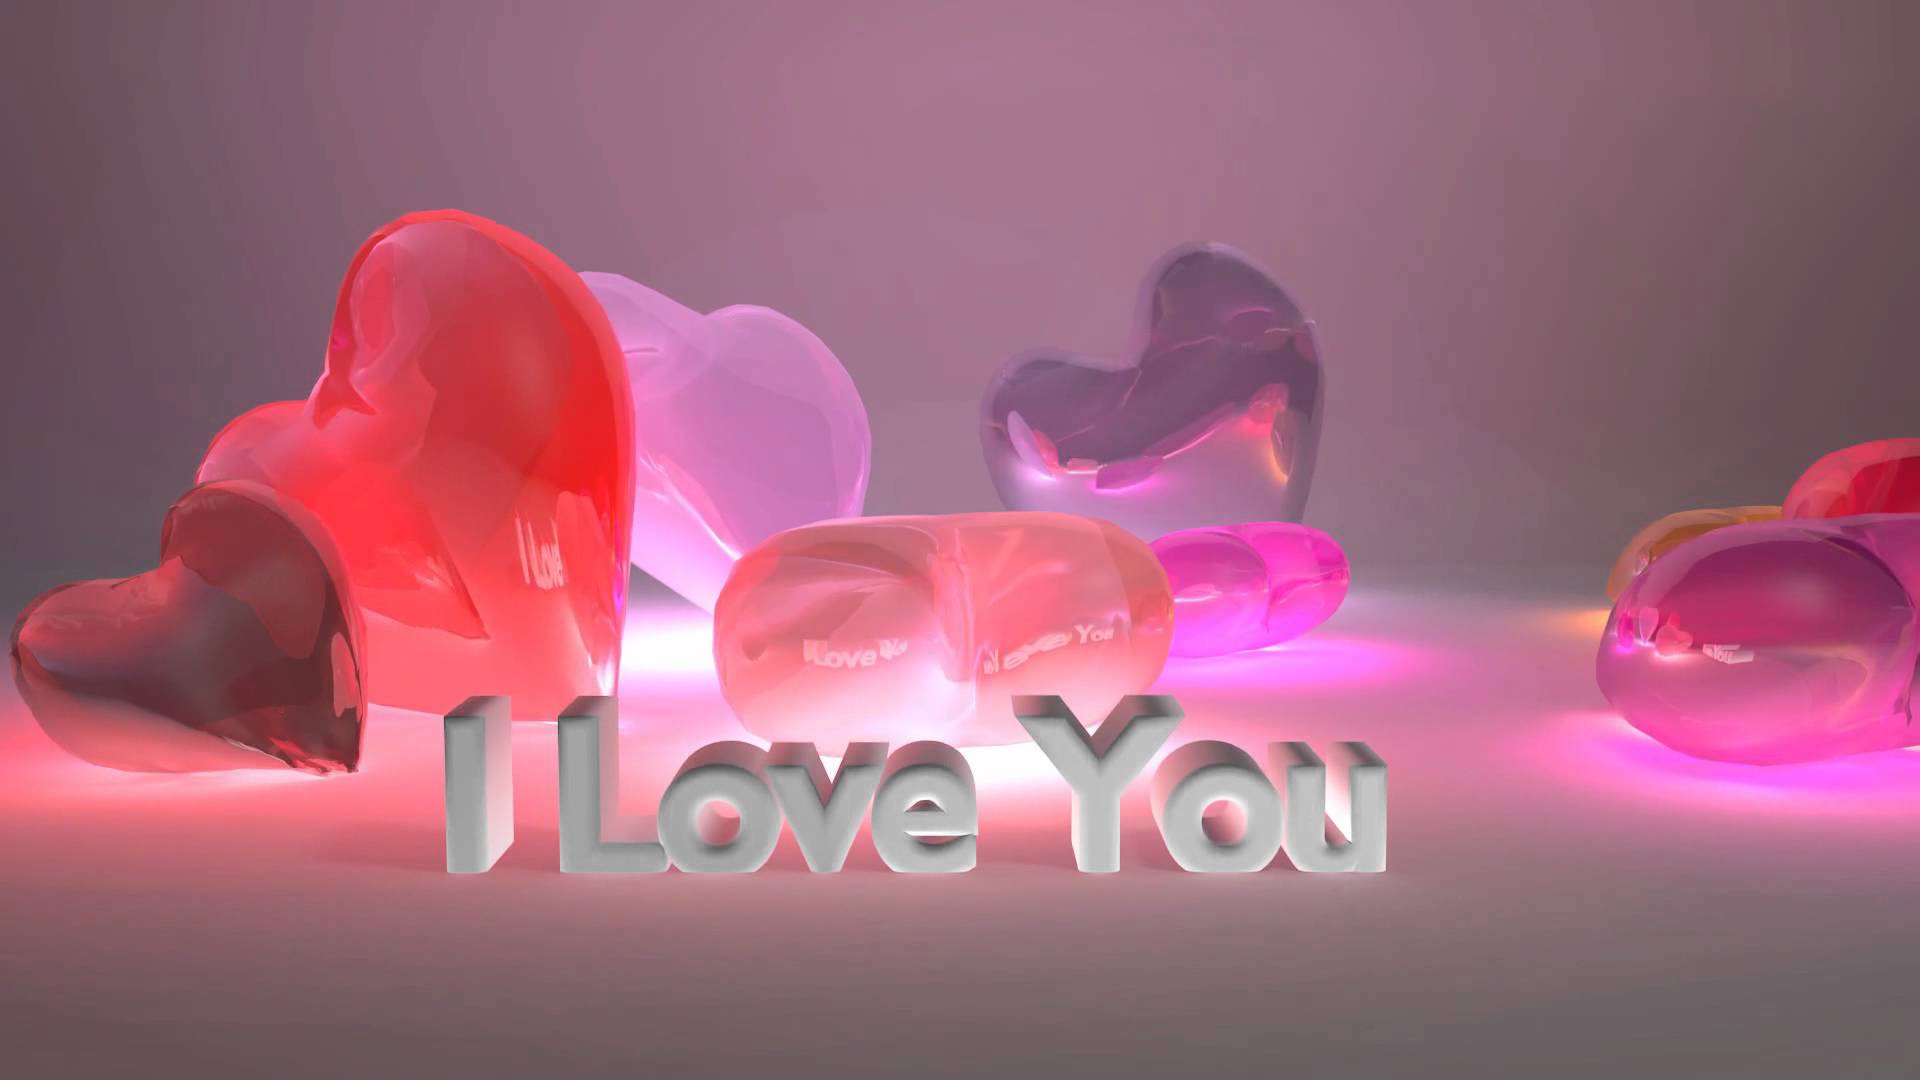 I Love You - Falling Candy Hearts - ECard - YouTube